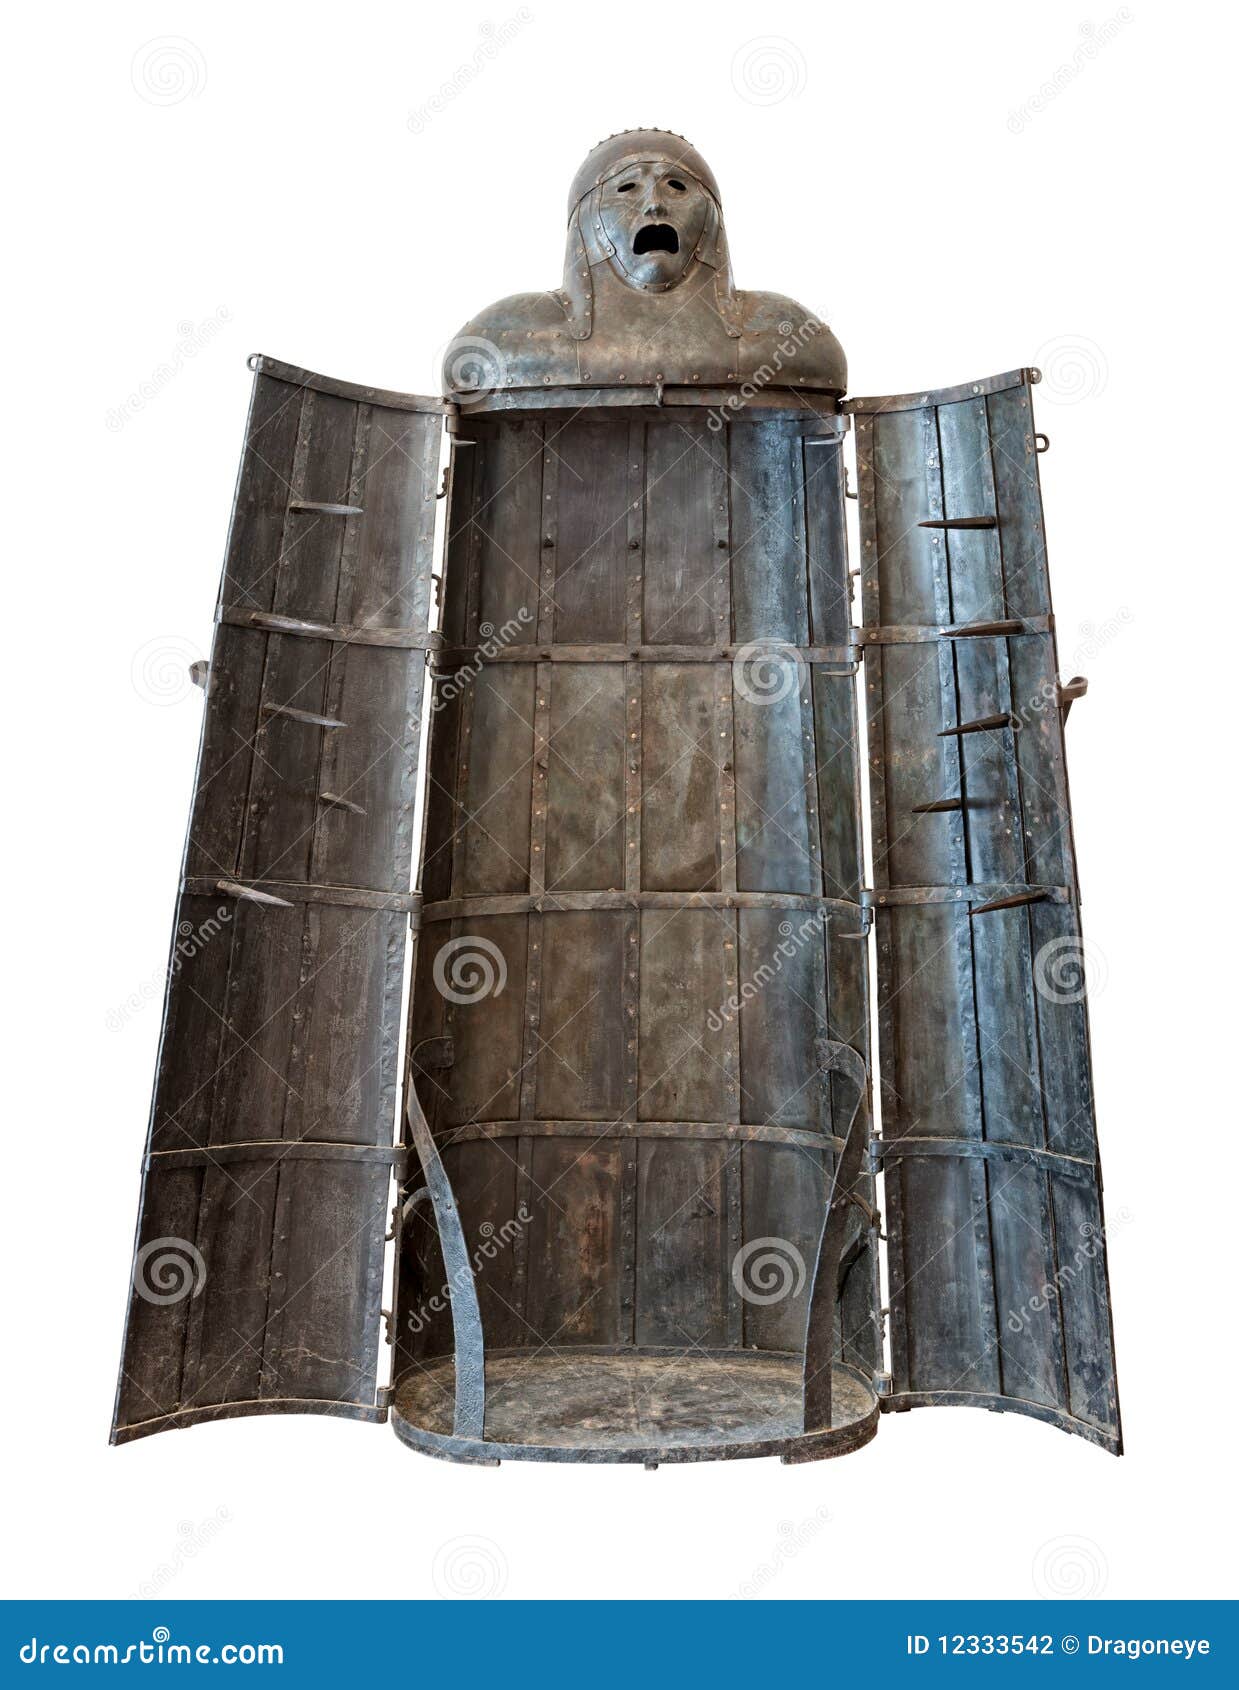 iron-maiden-medieval-torture-device-cutout-12333542.jpg